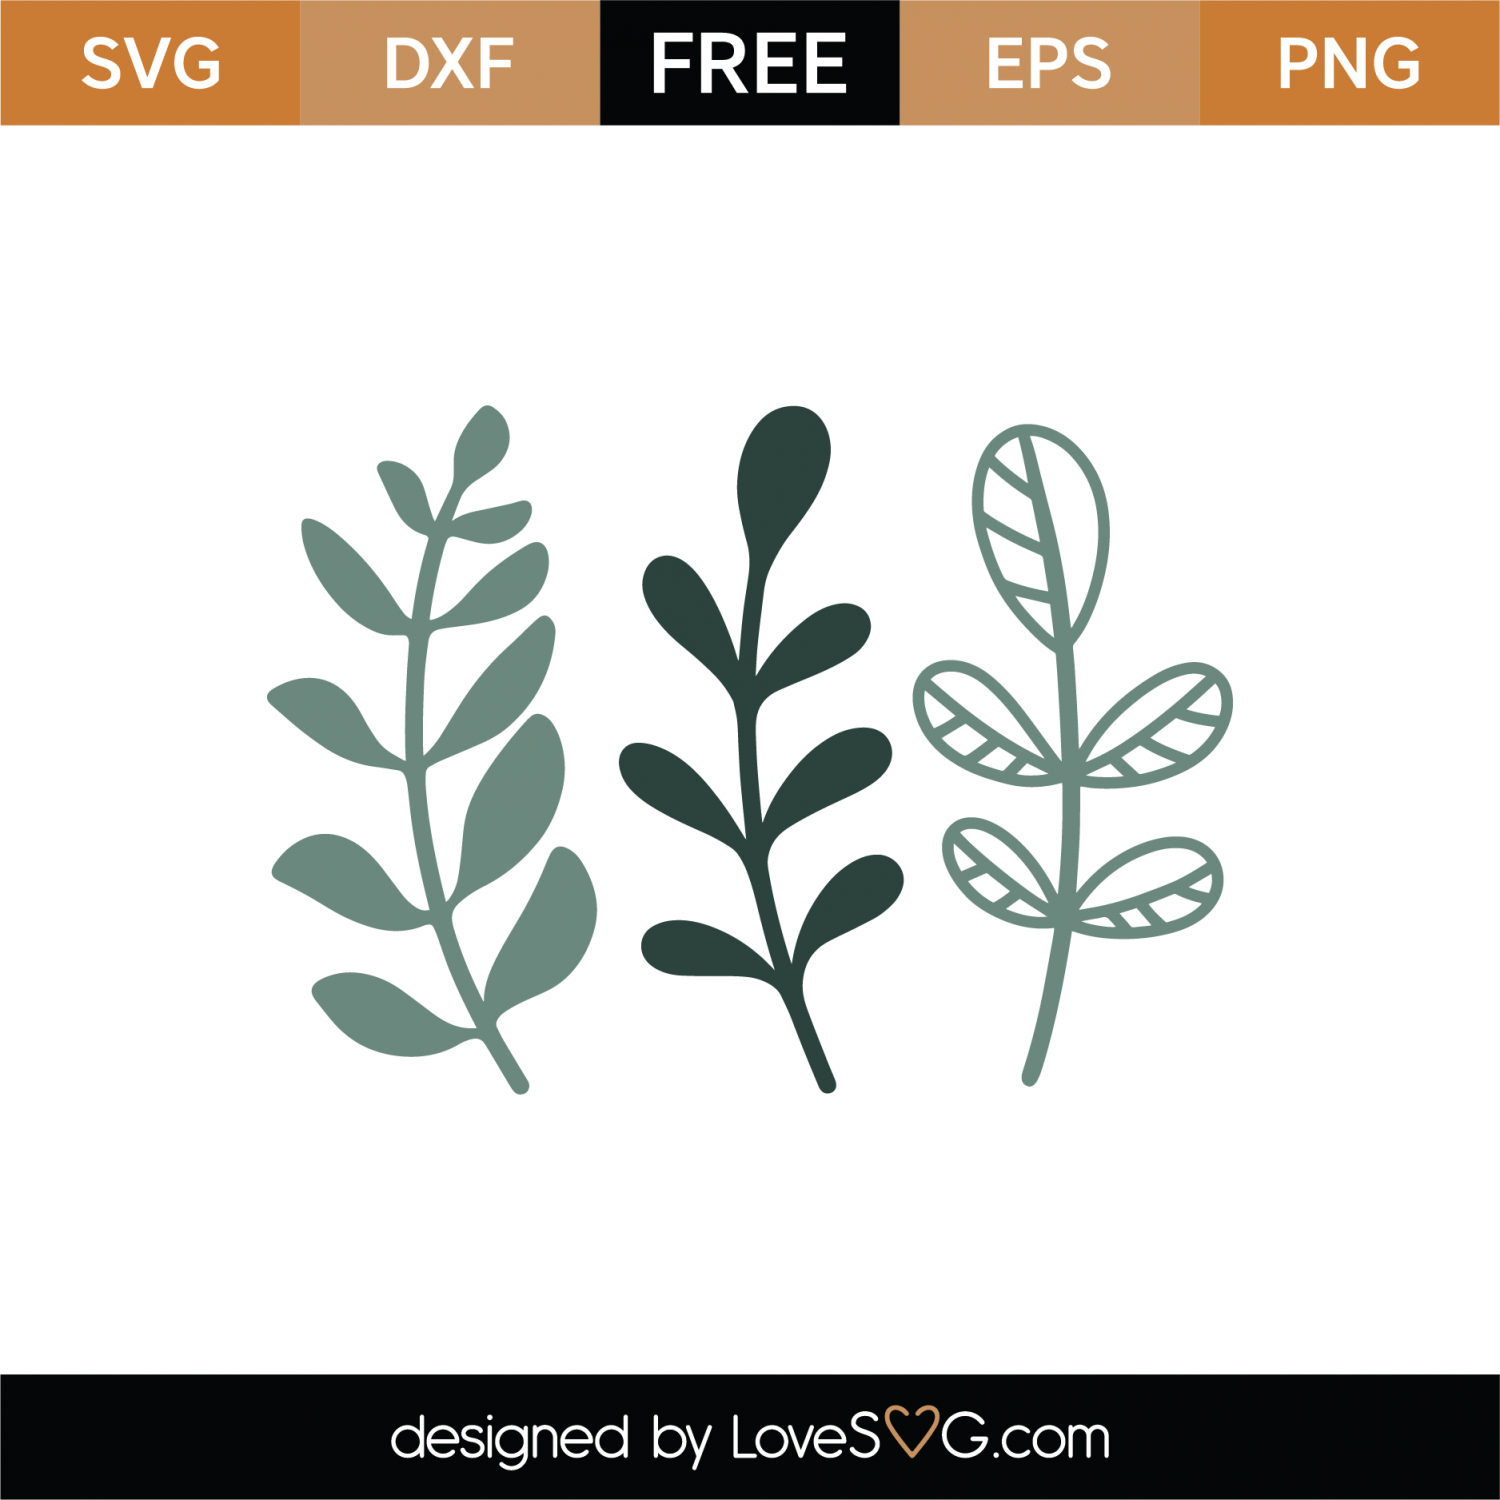 Download Free Leaves SVG Cut File | Lovesvg.com